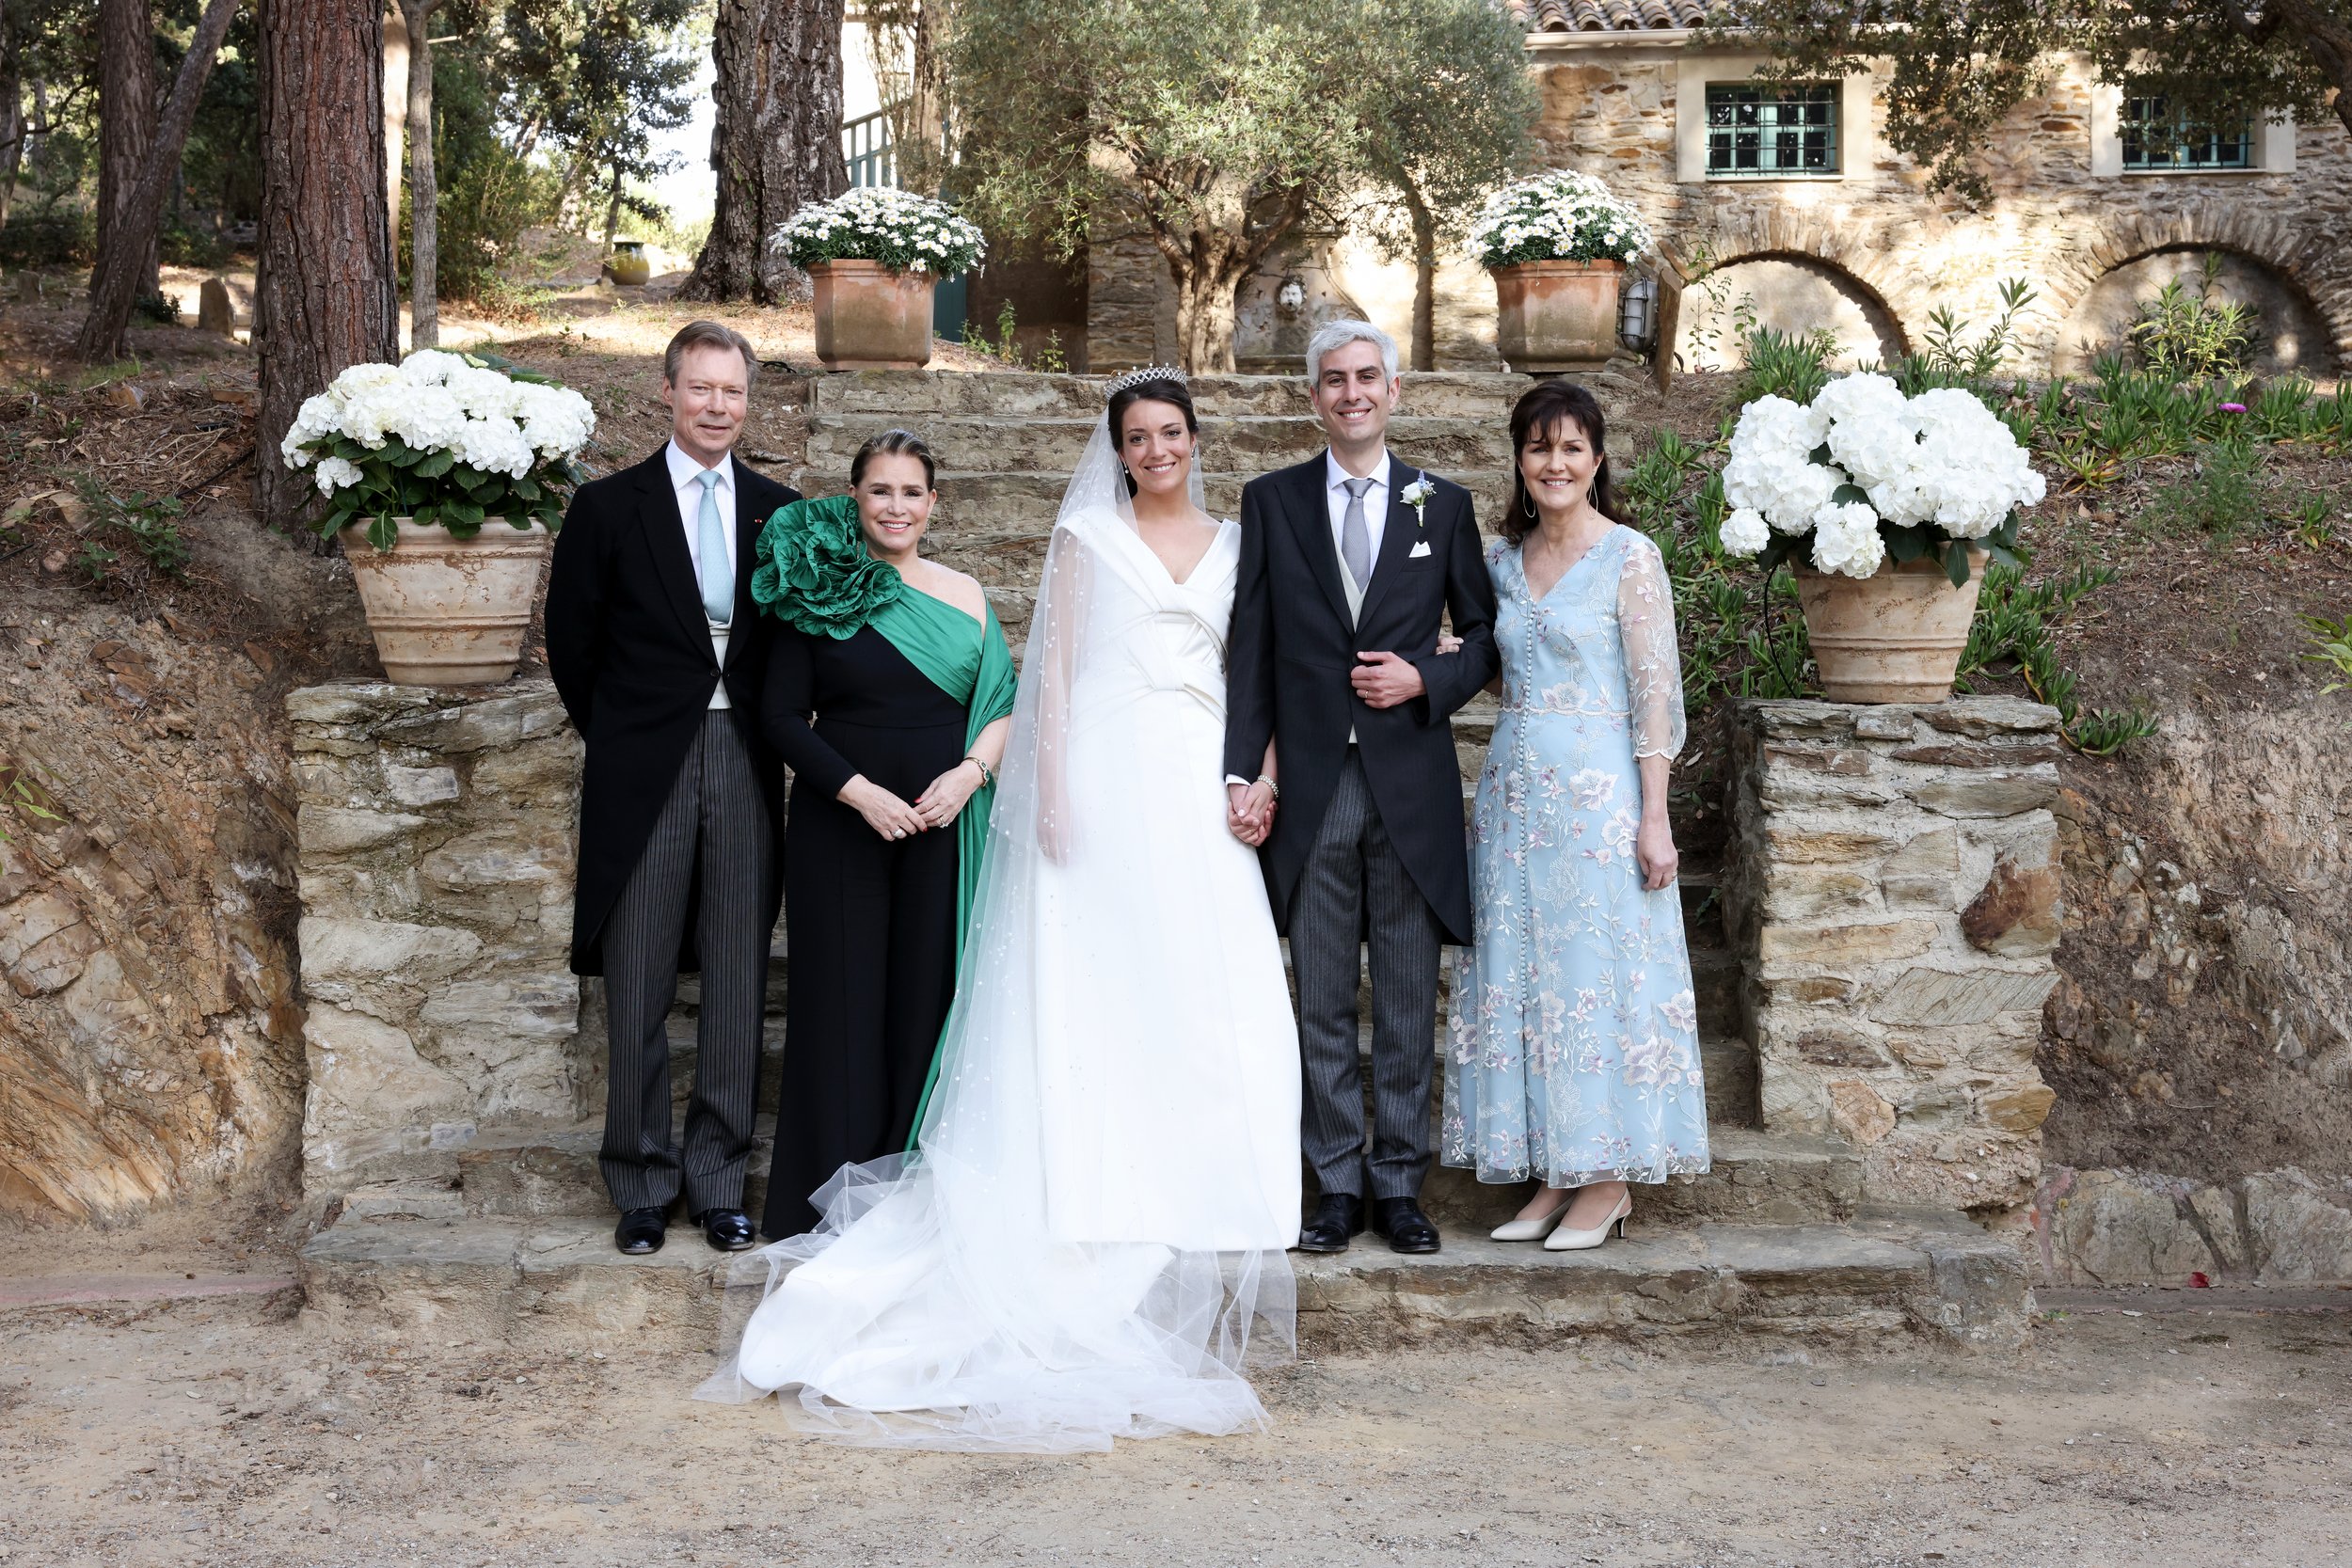 The Wedding of Princess Alexandra & Nicolas Bagory - Religious Wedding